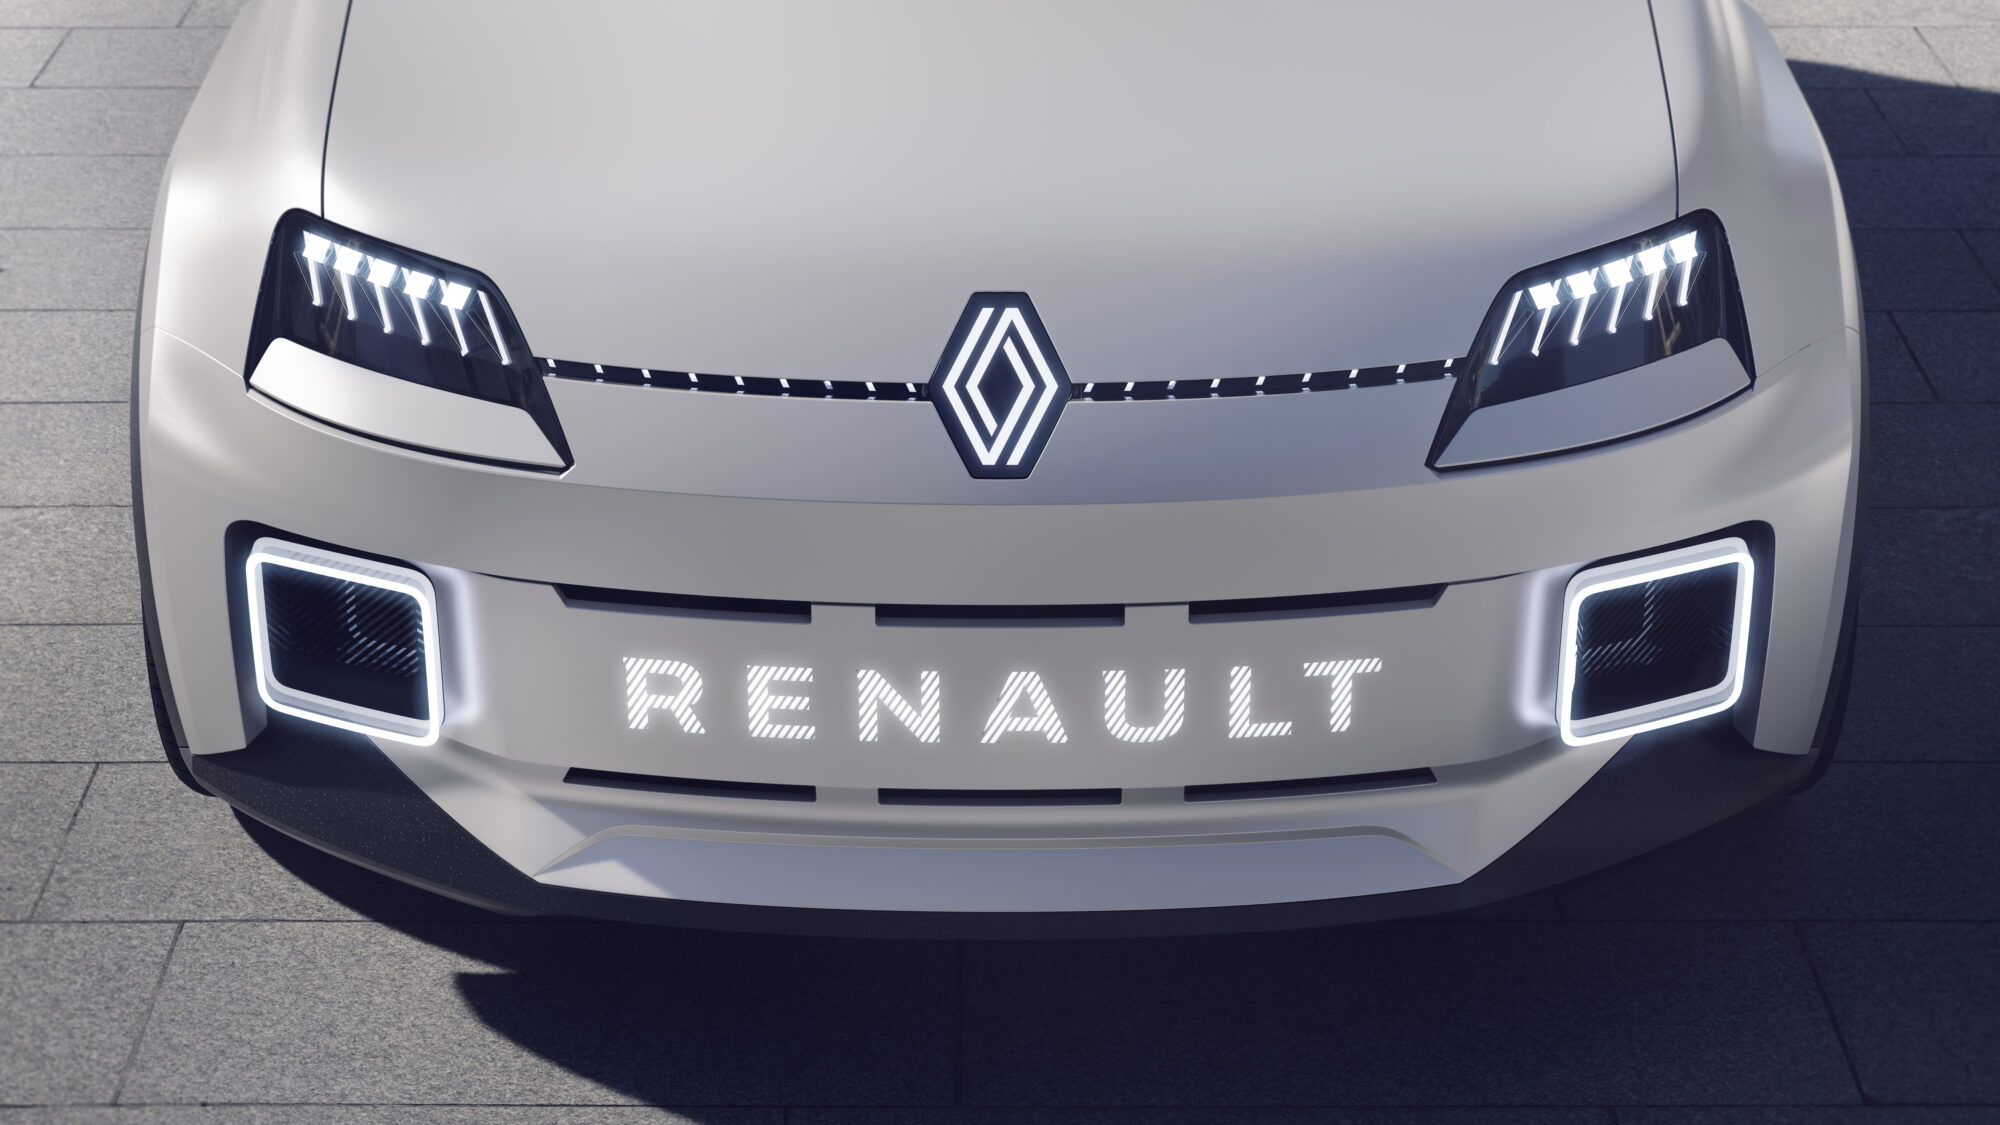 Renault 5 Prototype Roland-Garros